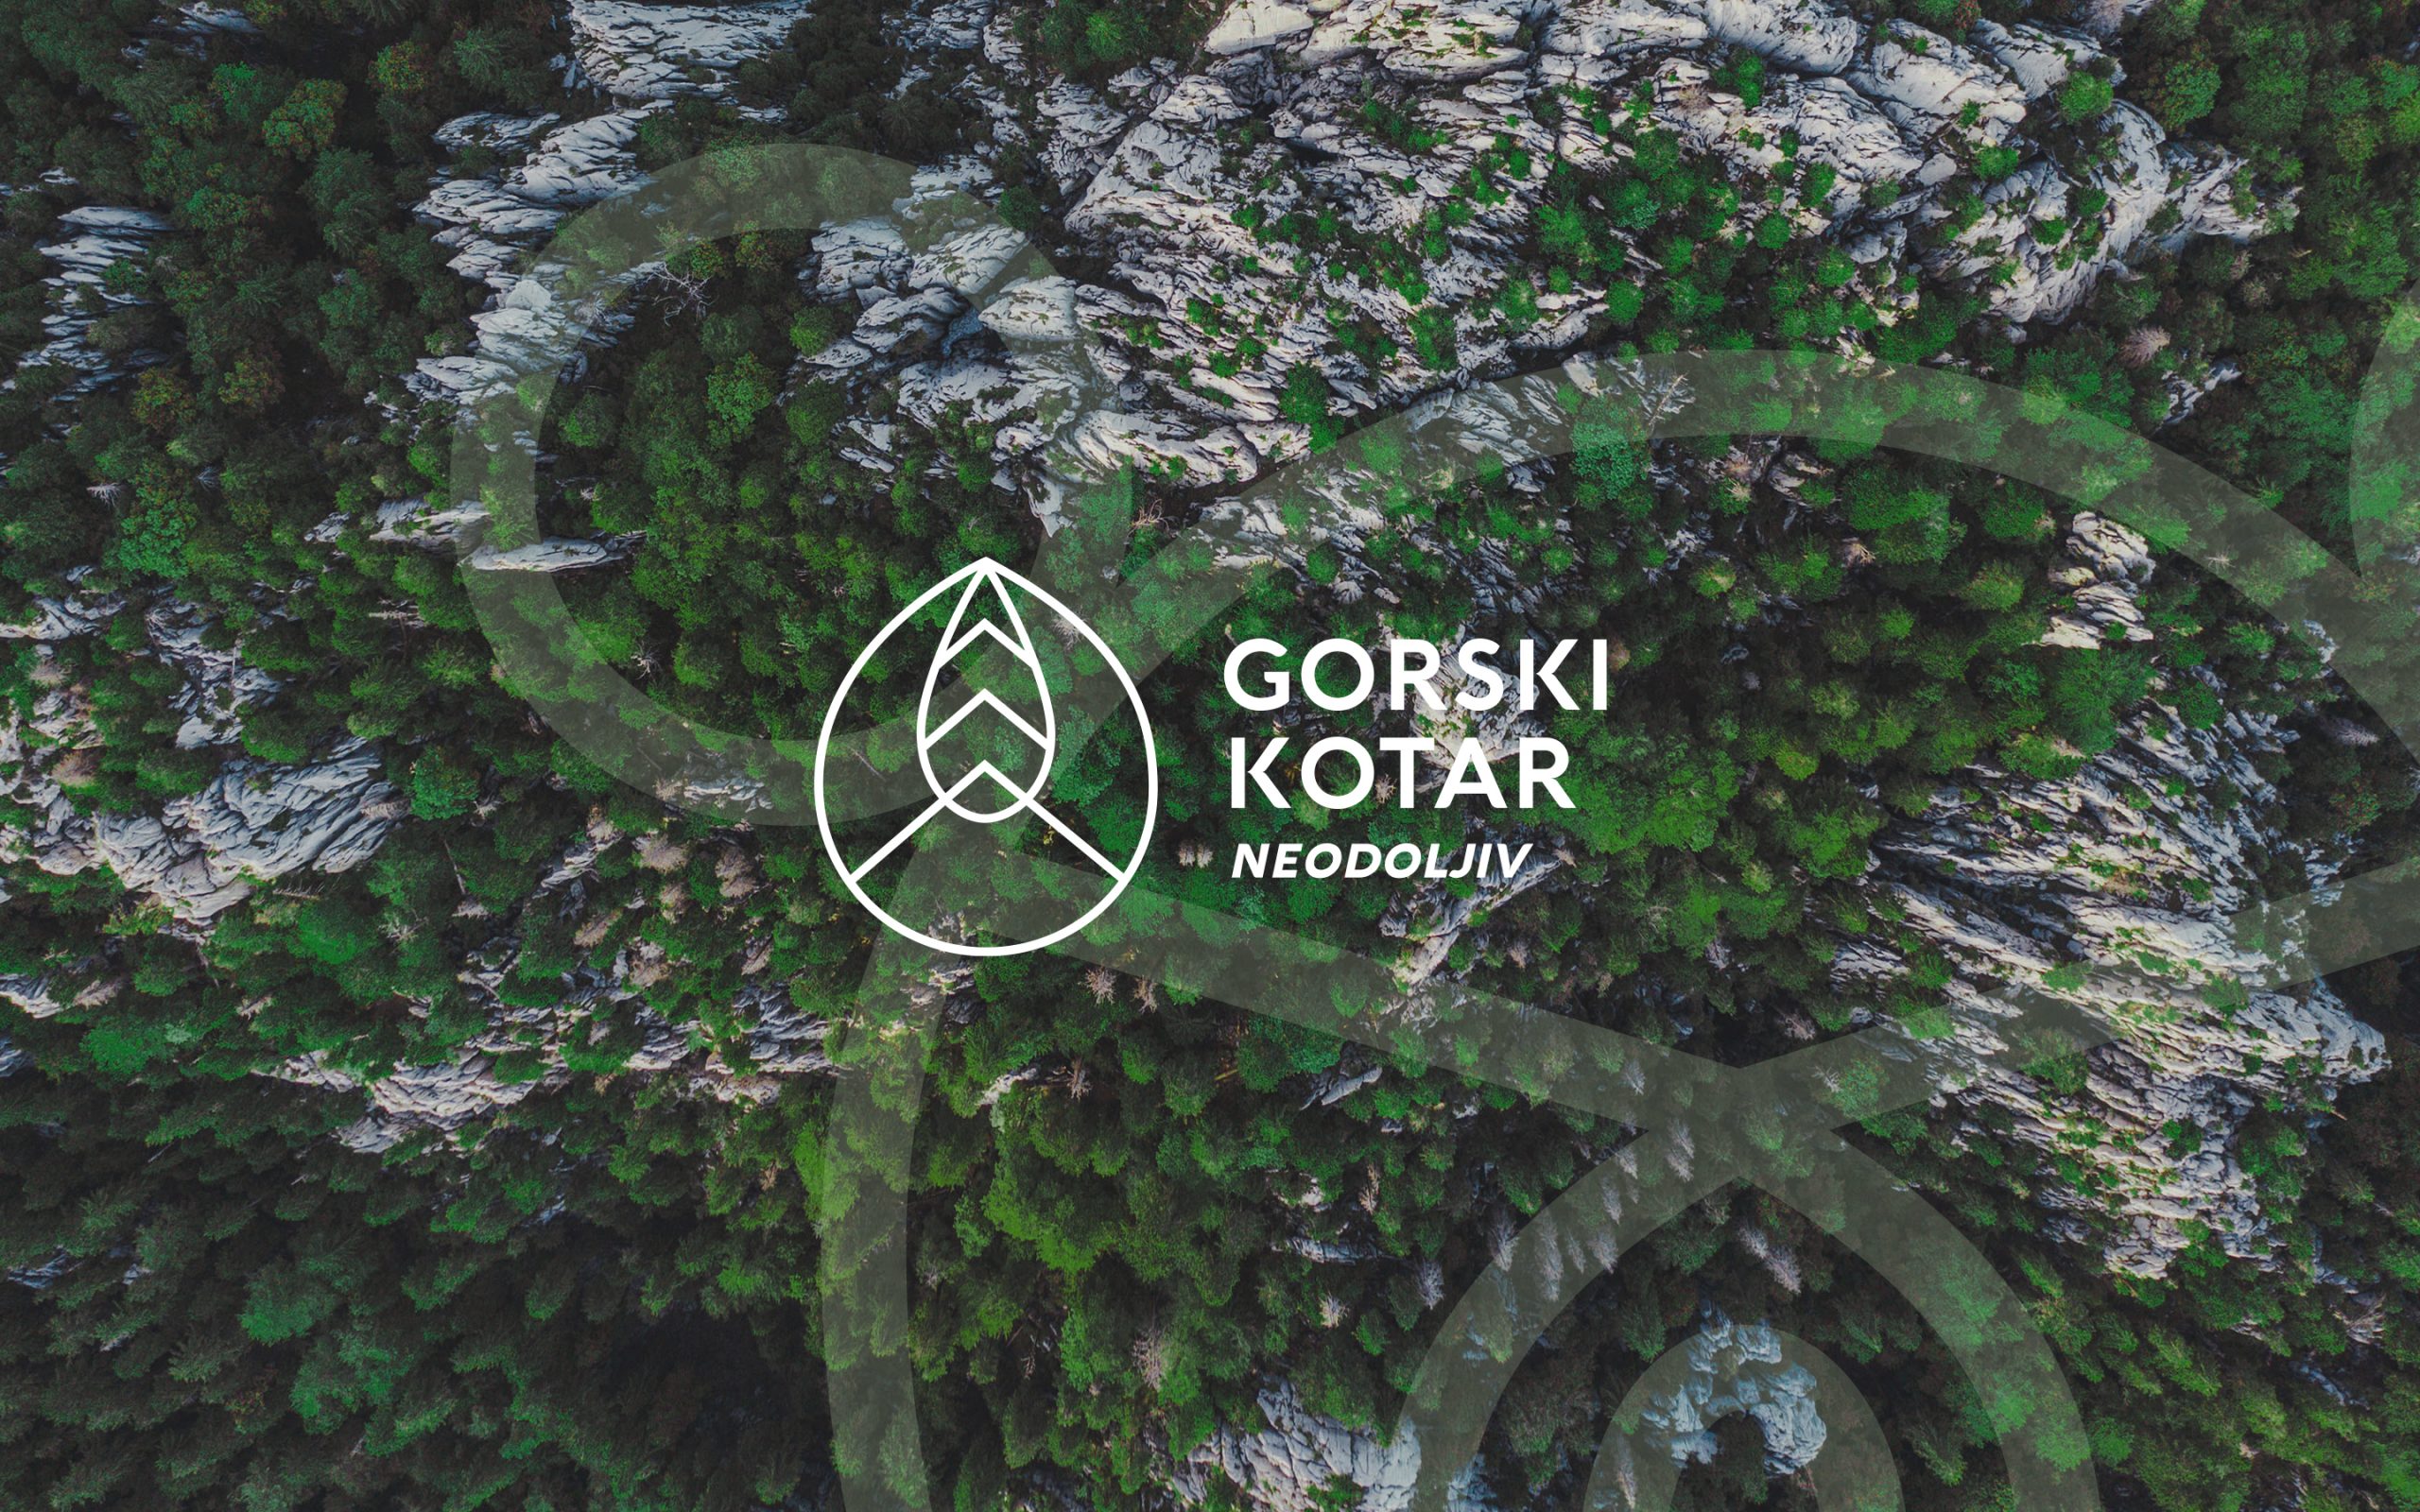 Gorski kotar has a new look!